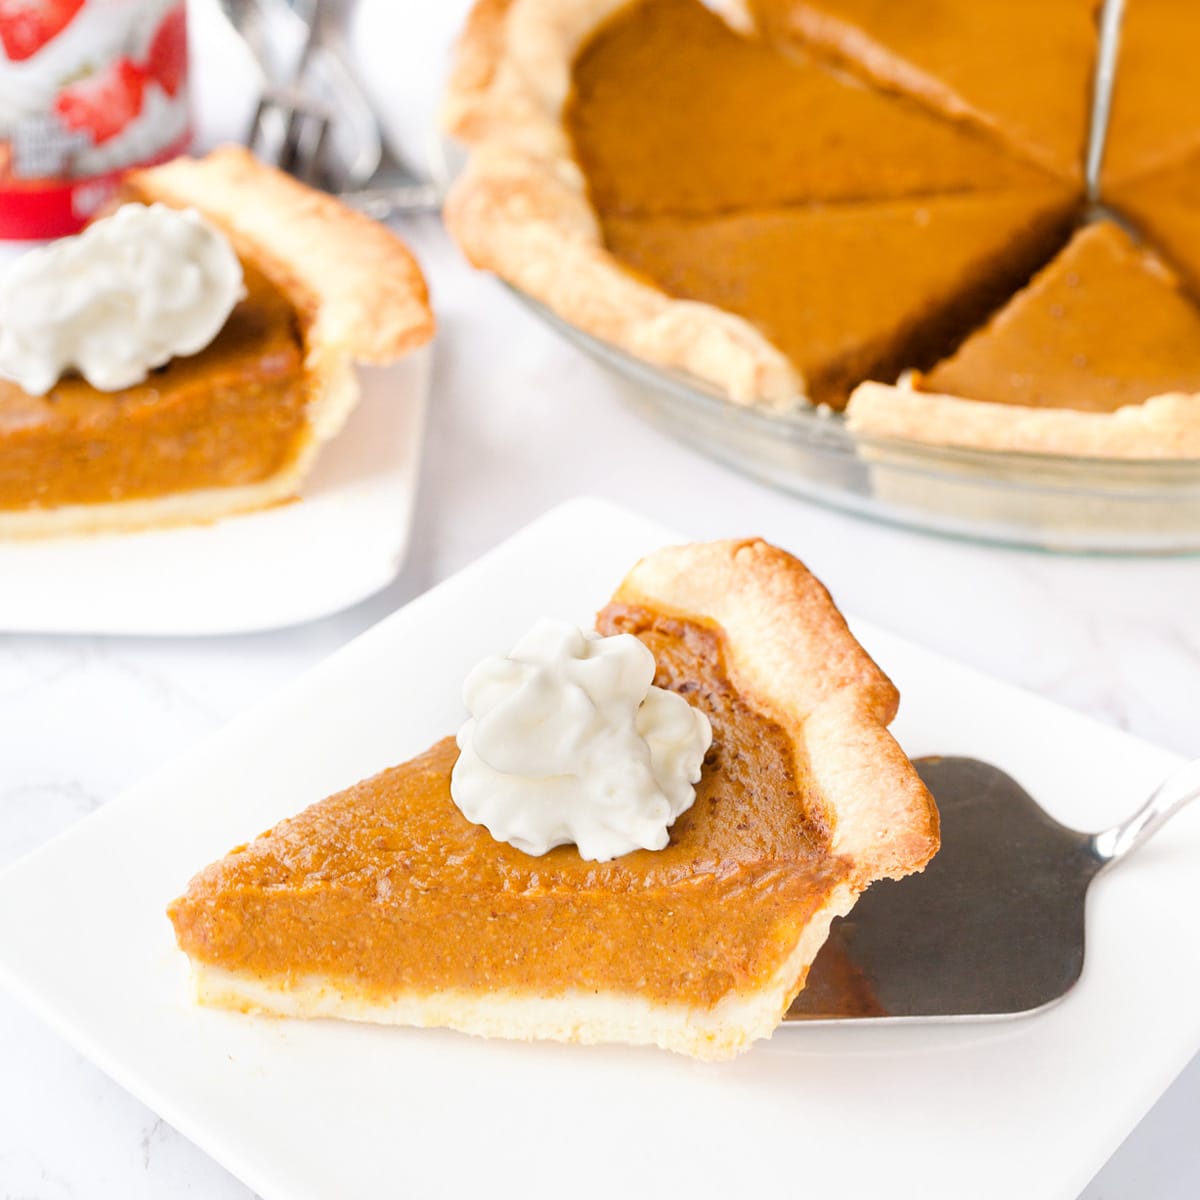 Healthy Pumpkin Pie - The Creamiest Pie You'll Ever Taste!